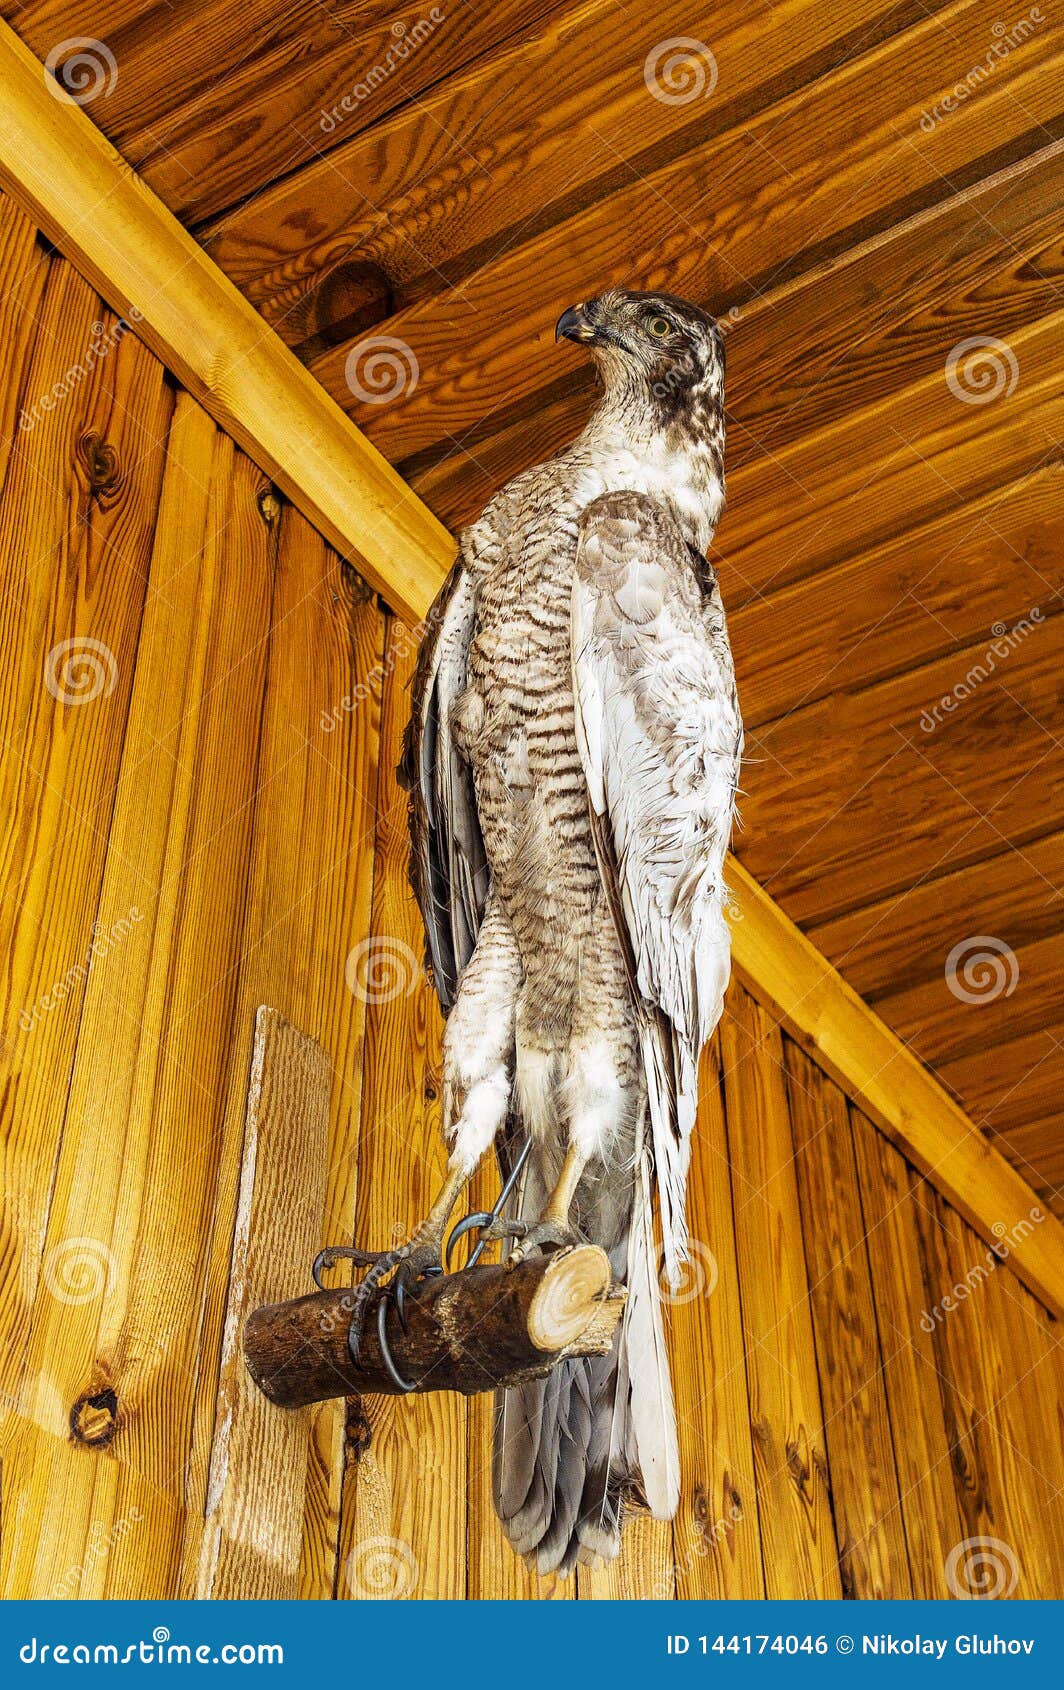 stuffed falcon